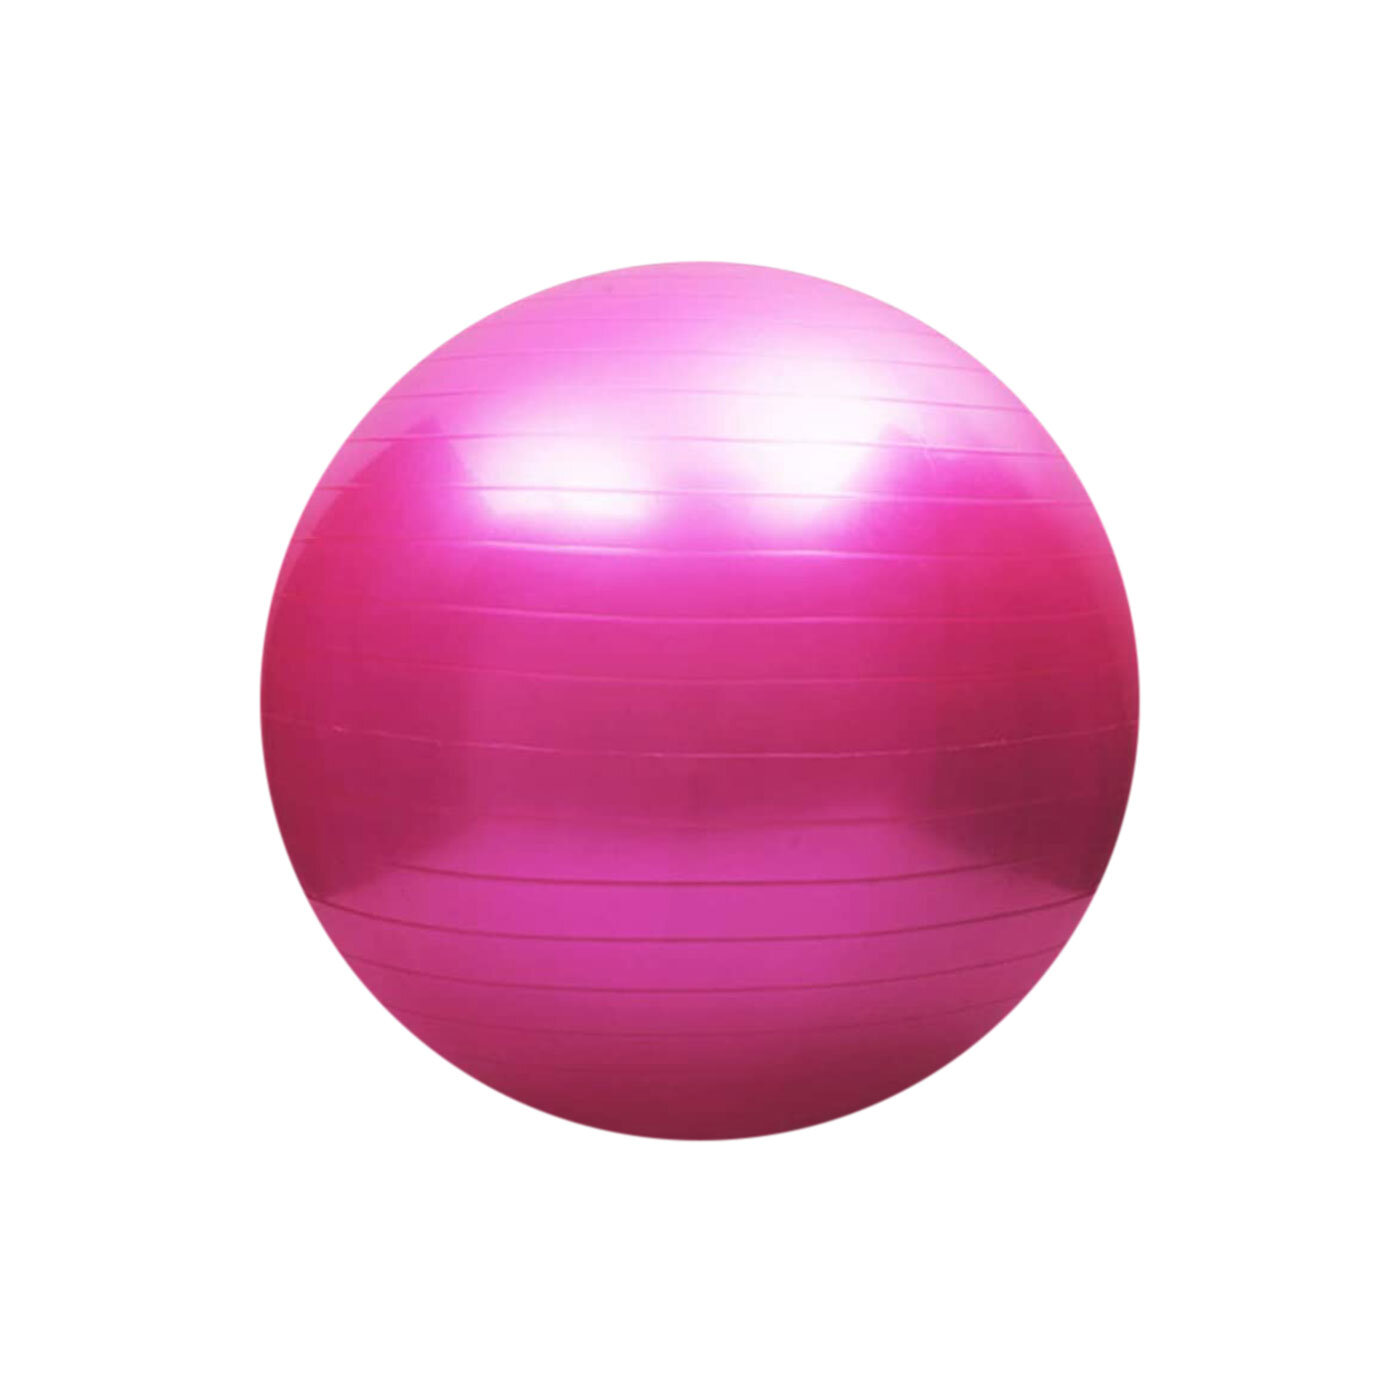 Tomshoo-Balance-ball.jpg